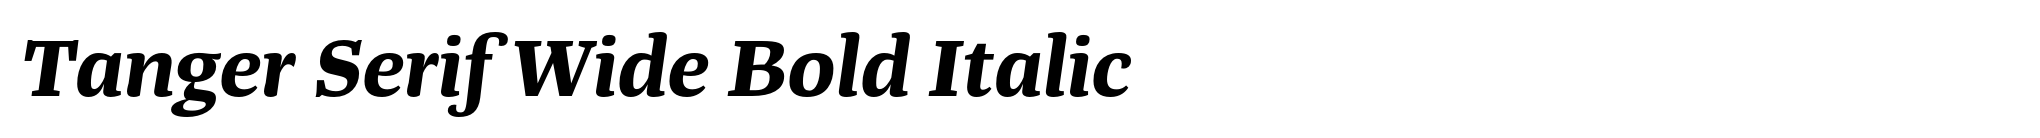 Tanger Serif Wide Bold Italic image